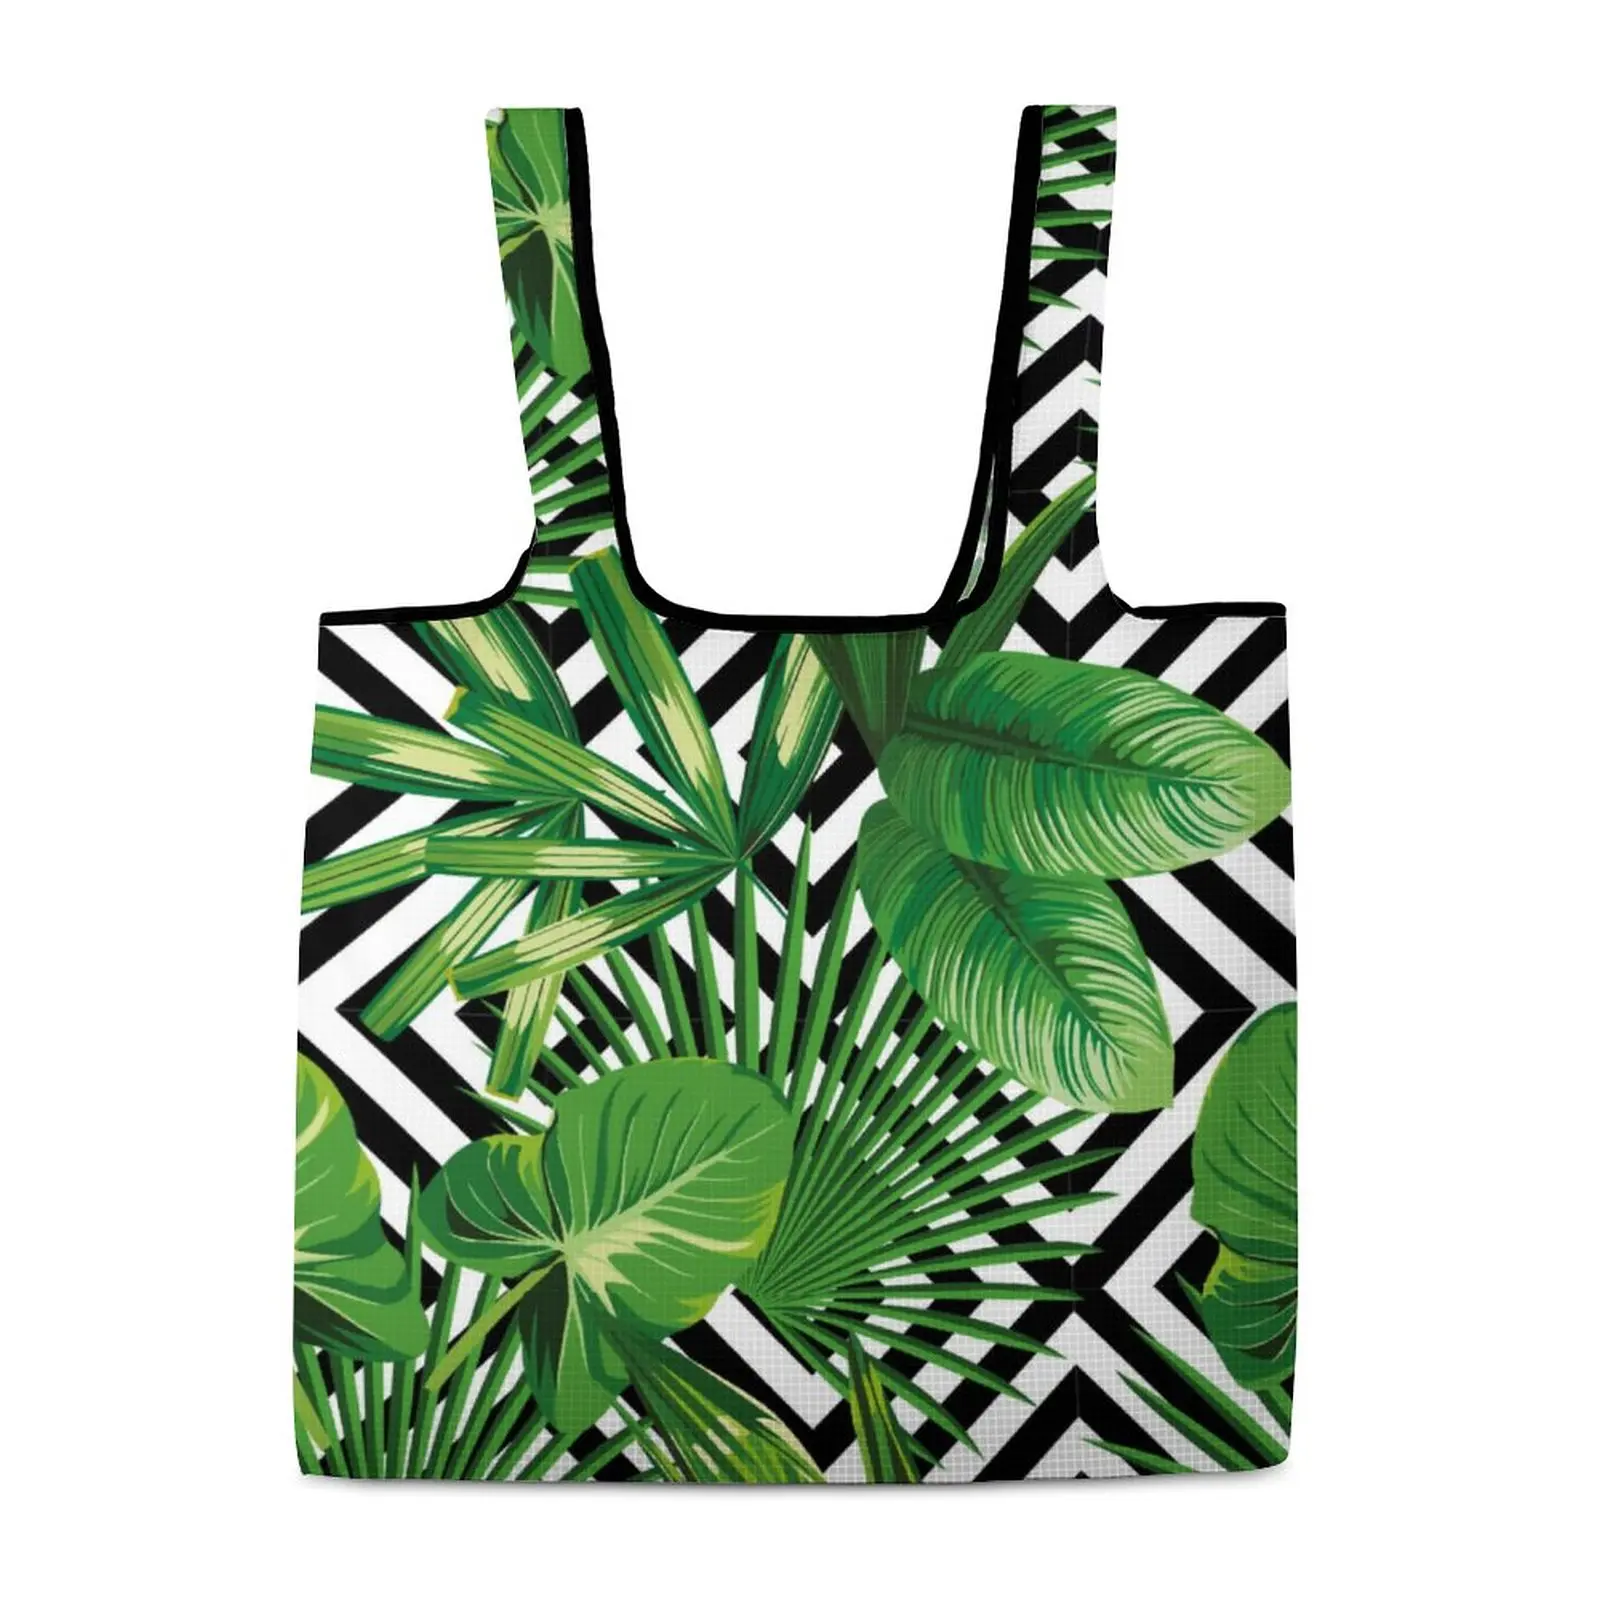 2pcs Lightweight Folding Shopping Painted Black Striped Green Leaf Fashionable Totebag Reusable Grocery Supermarket Satchel Bag